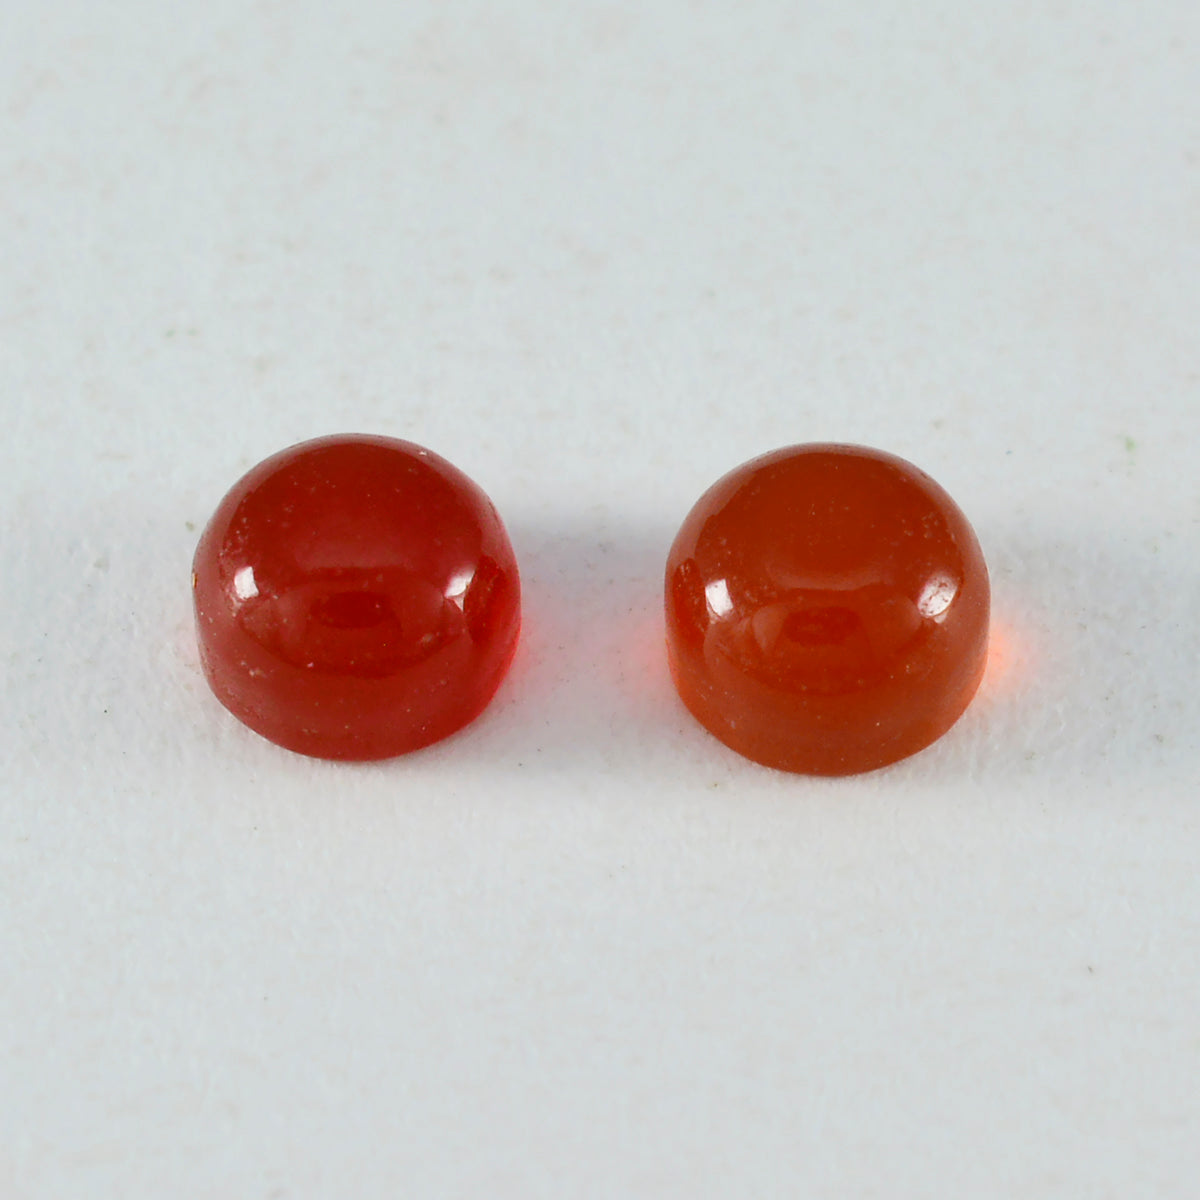 Riyogems 1PC Red Onyx Cabochon 9x9 mm Round Shape sweet Quality Gemstone